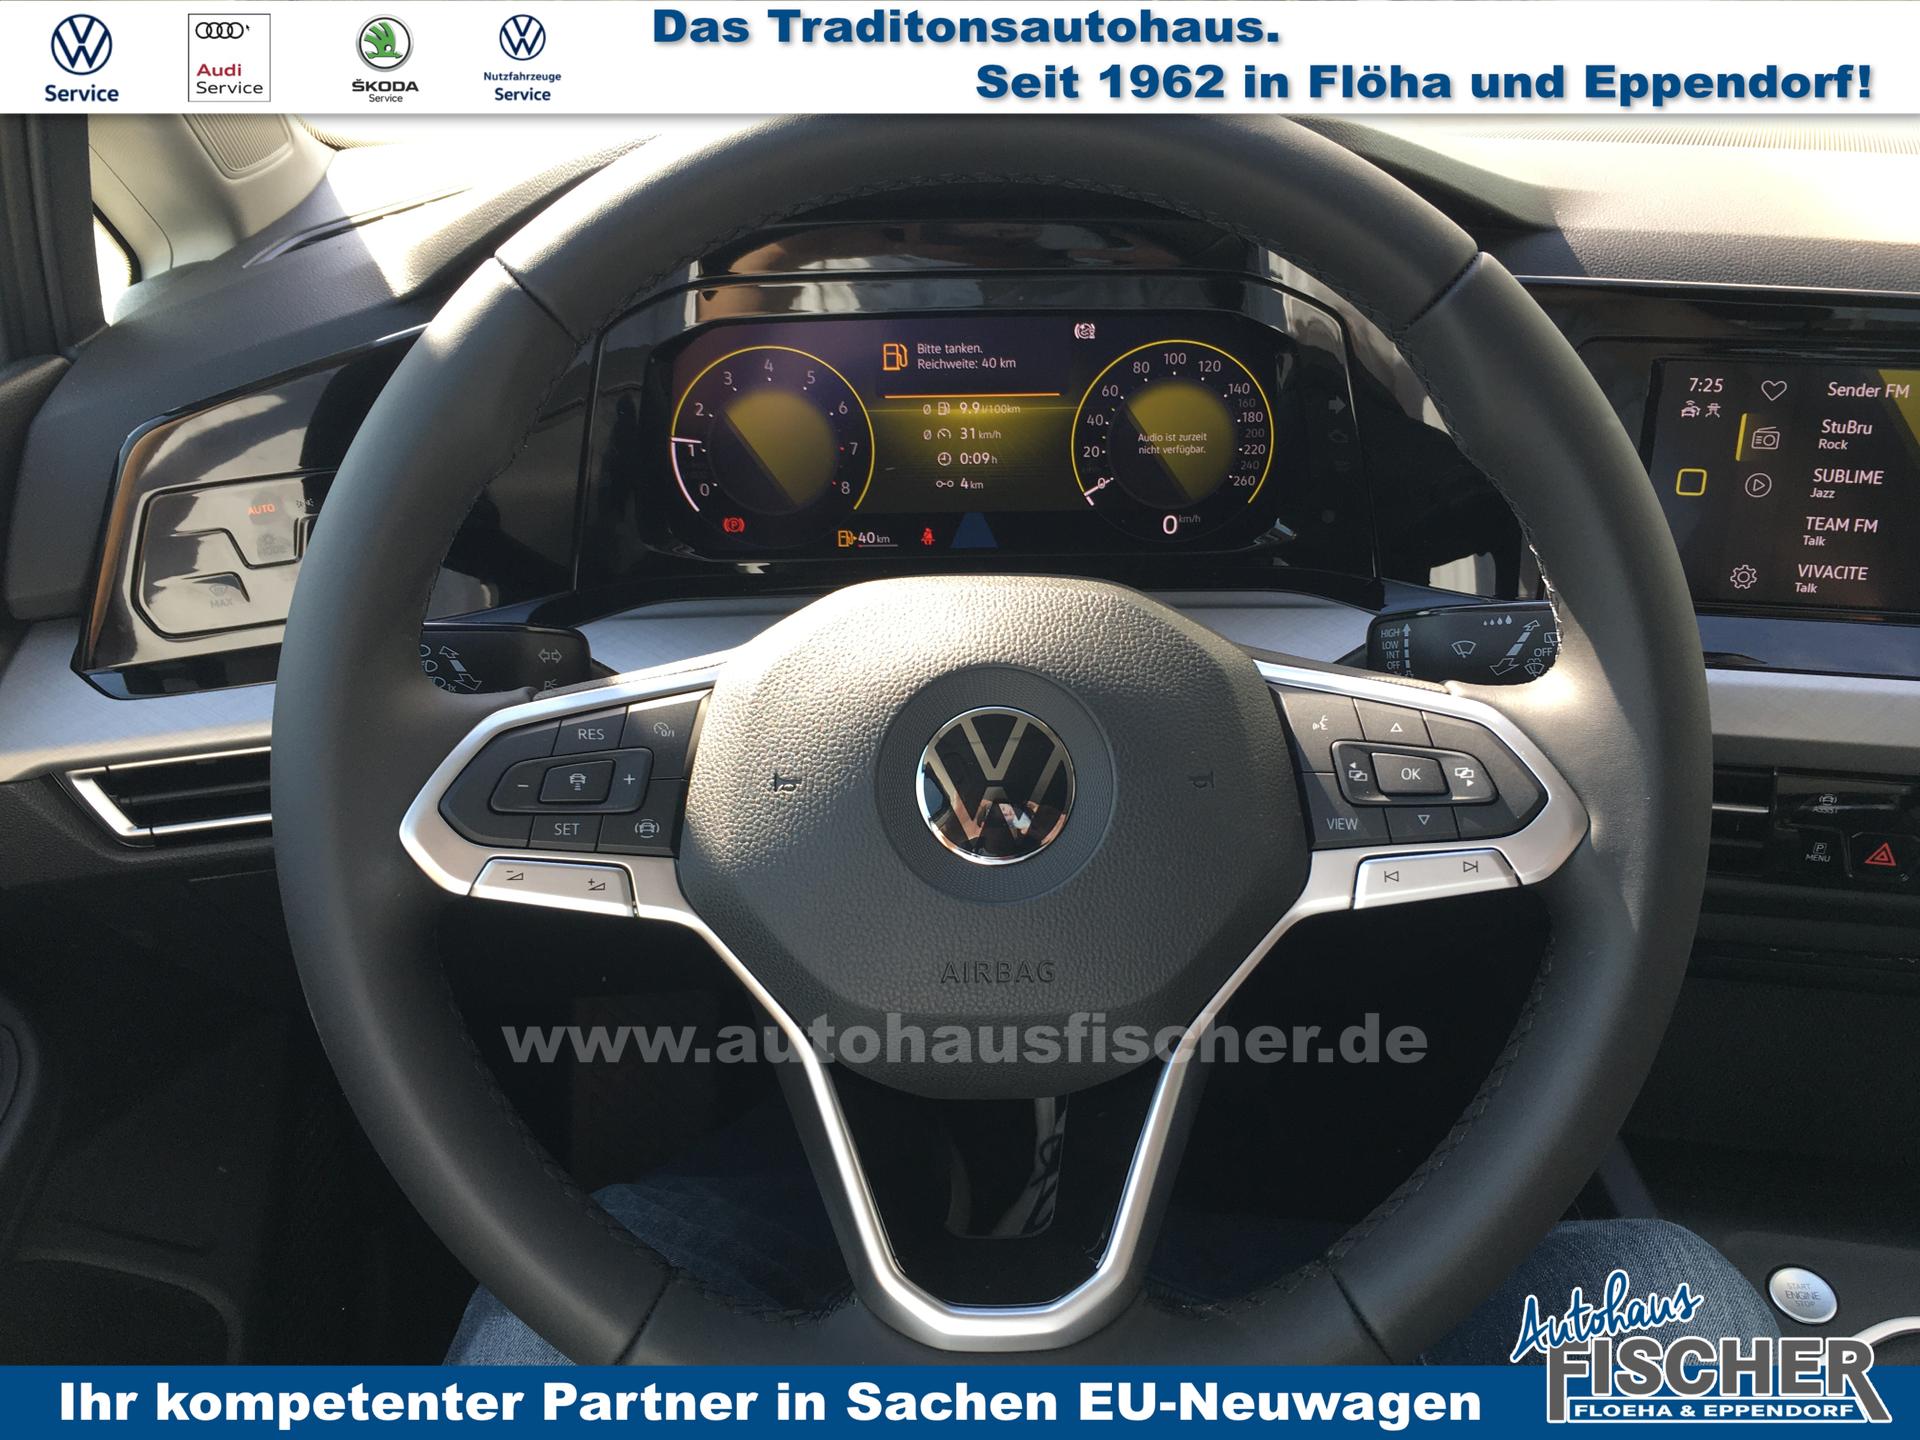 Volkswagen Golf LIFE 2.0 TDI 115PS inkl. KLIMAAUTOMATIK RADIO  COMPOSITION/BT/2x USB/APP-CONNECT LED-SCHEINW./-RÜCKLEUCHTEN AMBIENTEBEL.  ACTIVE INFO DISPLAY PS VO/HI INDUKTIVE LADESTATION STARTKNOPF  MITTELARMLEHNE VO+HI MULTIFUNKTIONS-LEDERLENKRAD 16